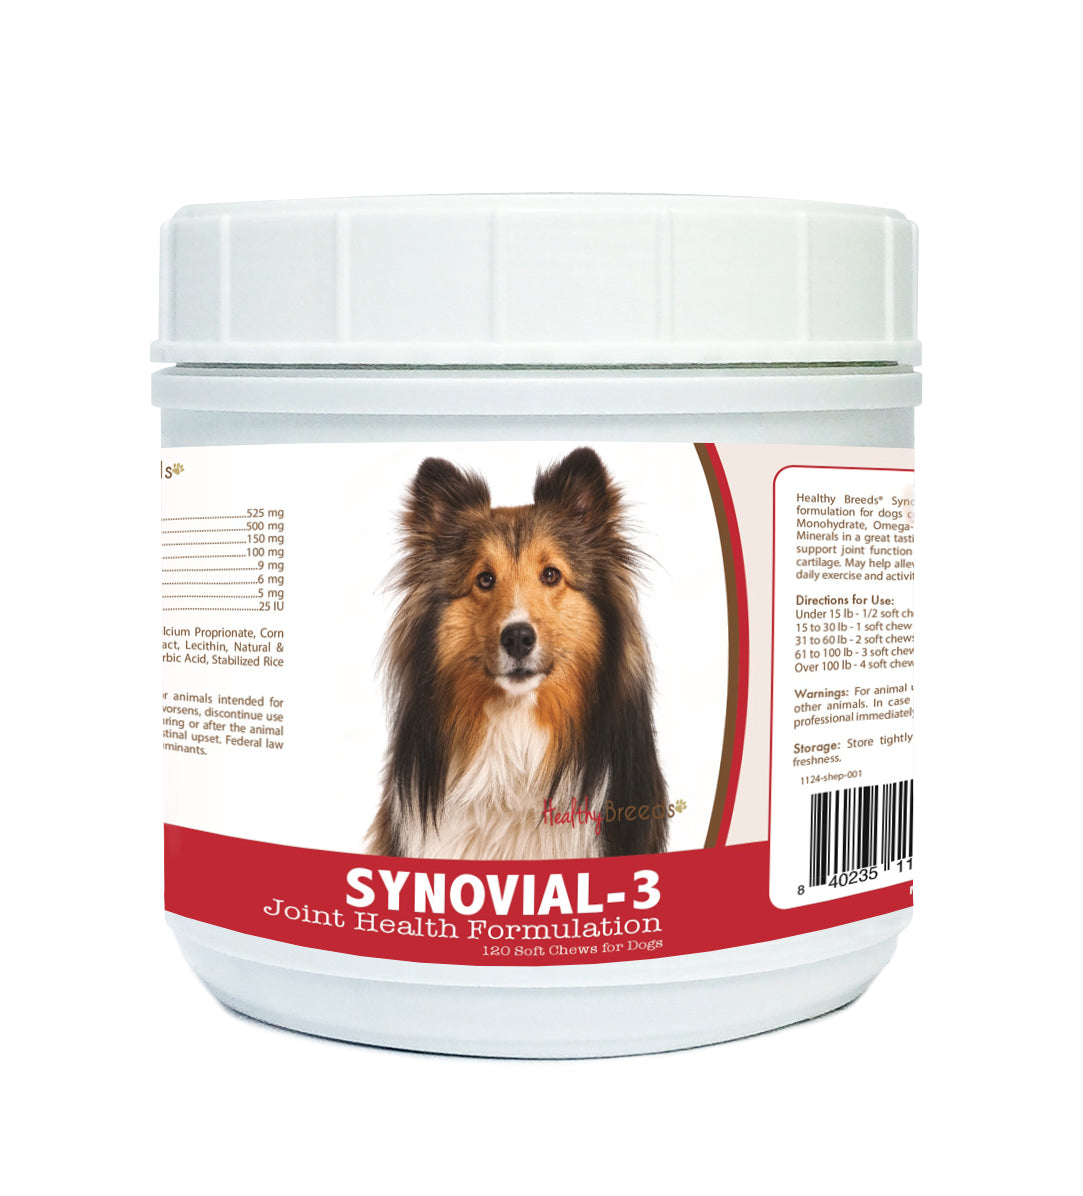 Shetland Sheepdog Synovial-3 Joint Health Formulation Soft Chews 120 Count